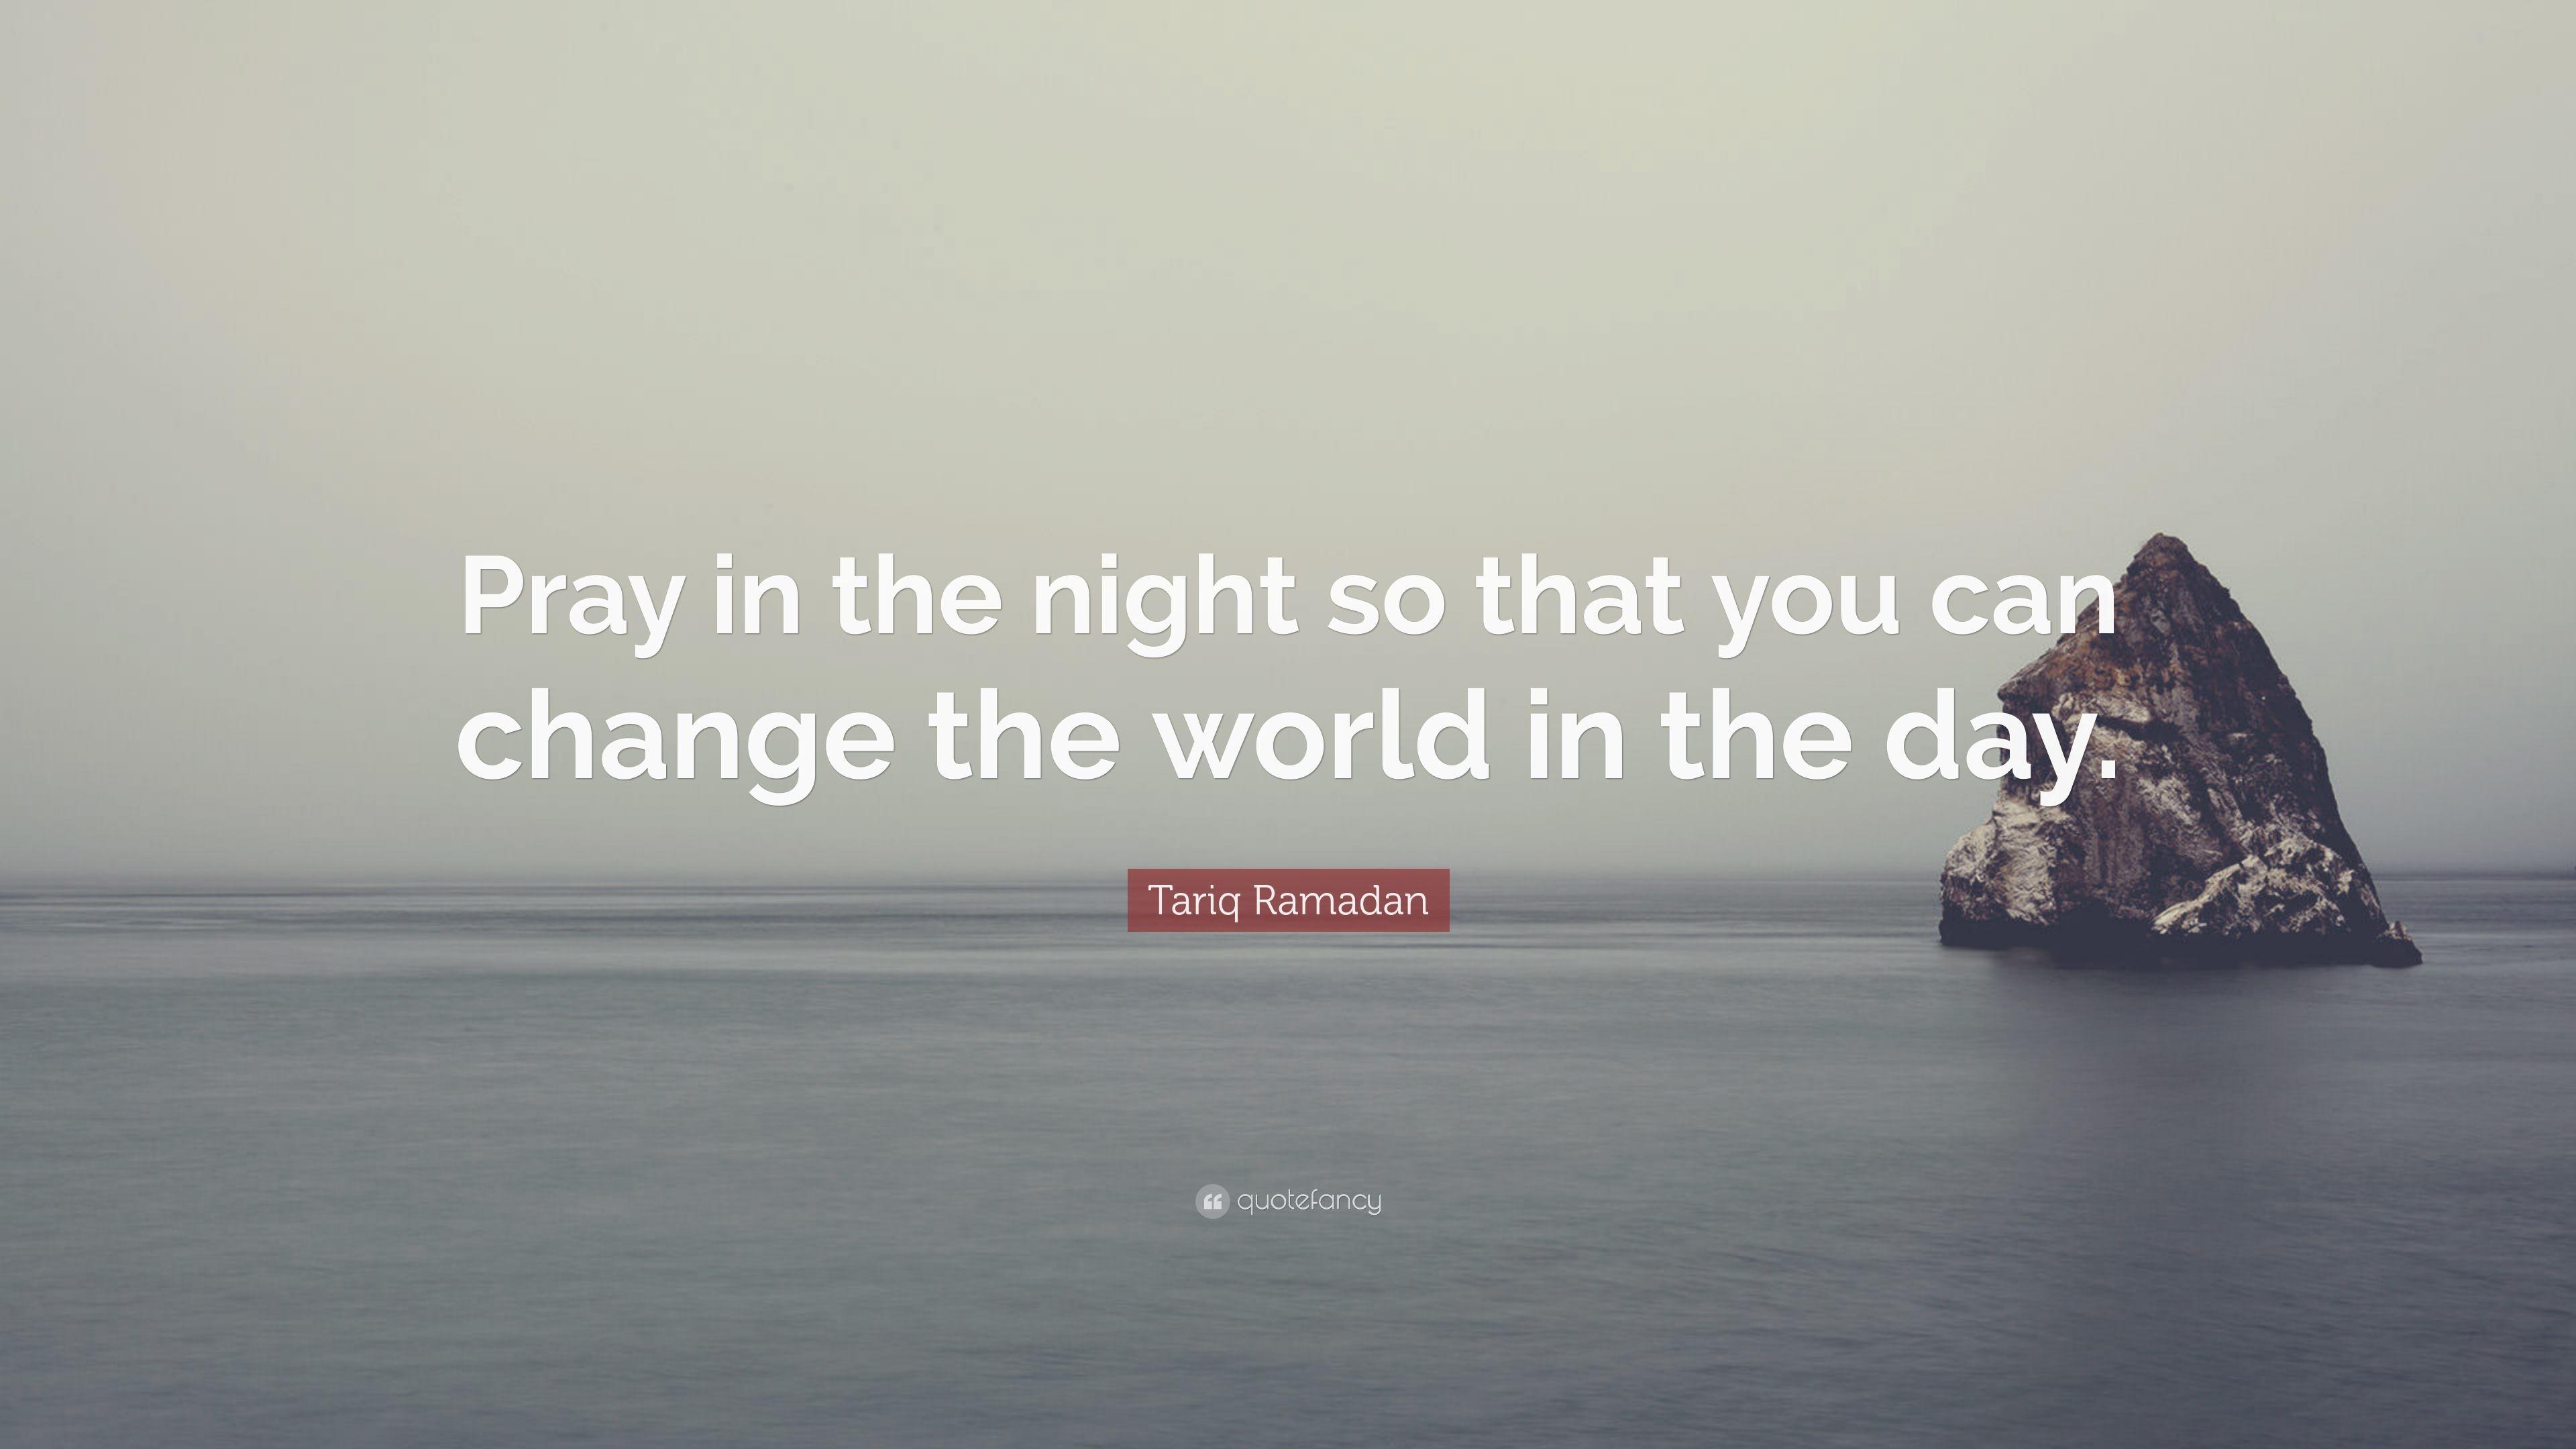 Tariq Ramadan Quote: “Pray in the night so that you can change